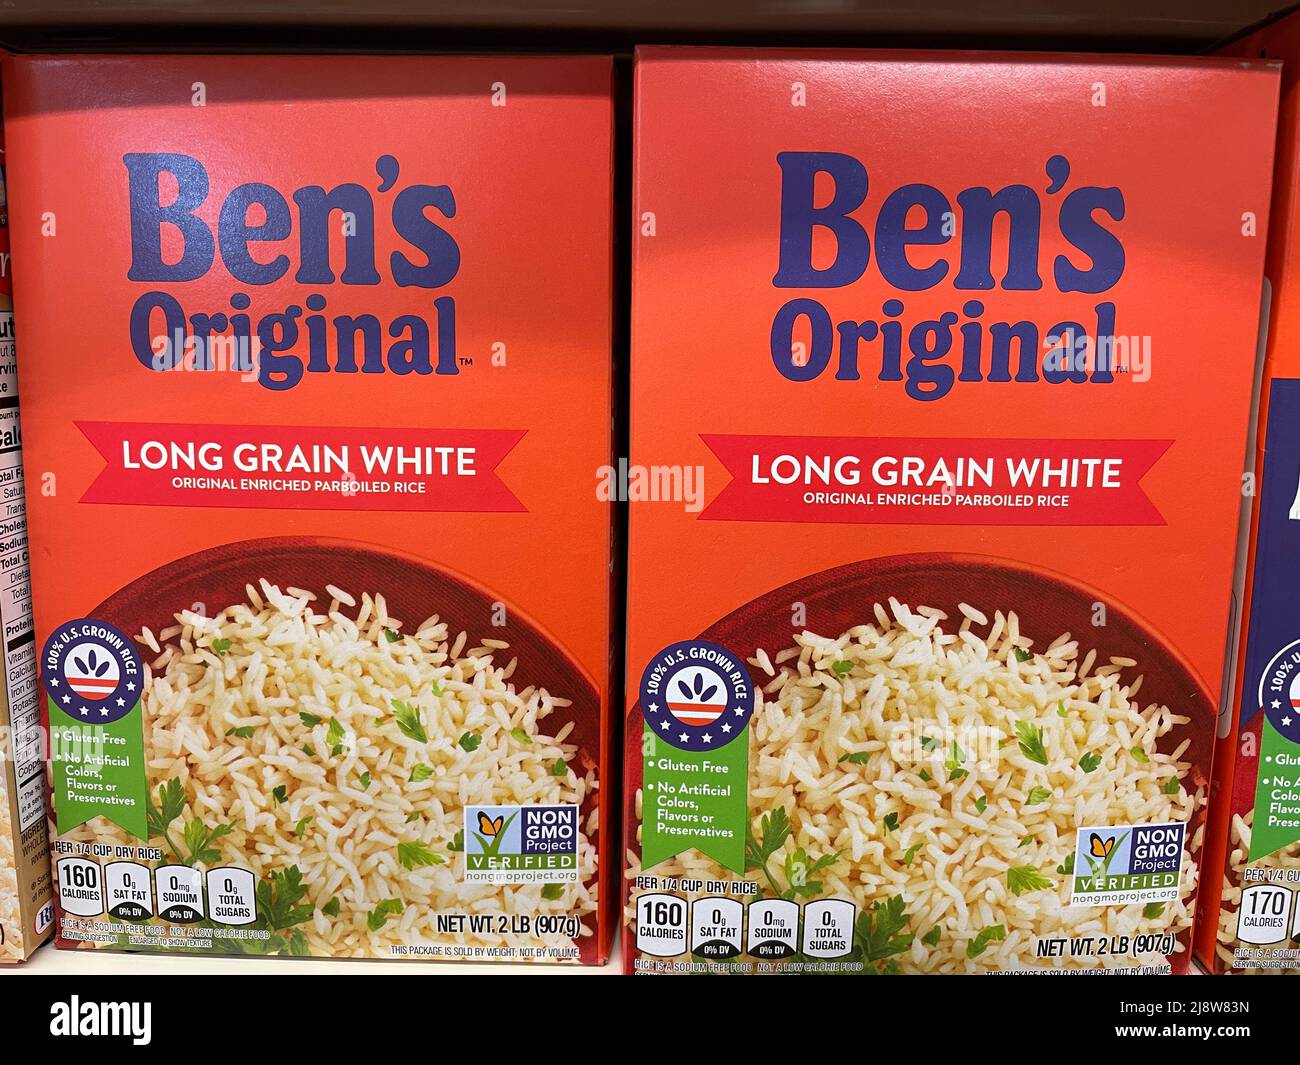 Ben's Original Long Grain White, 12 lb.